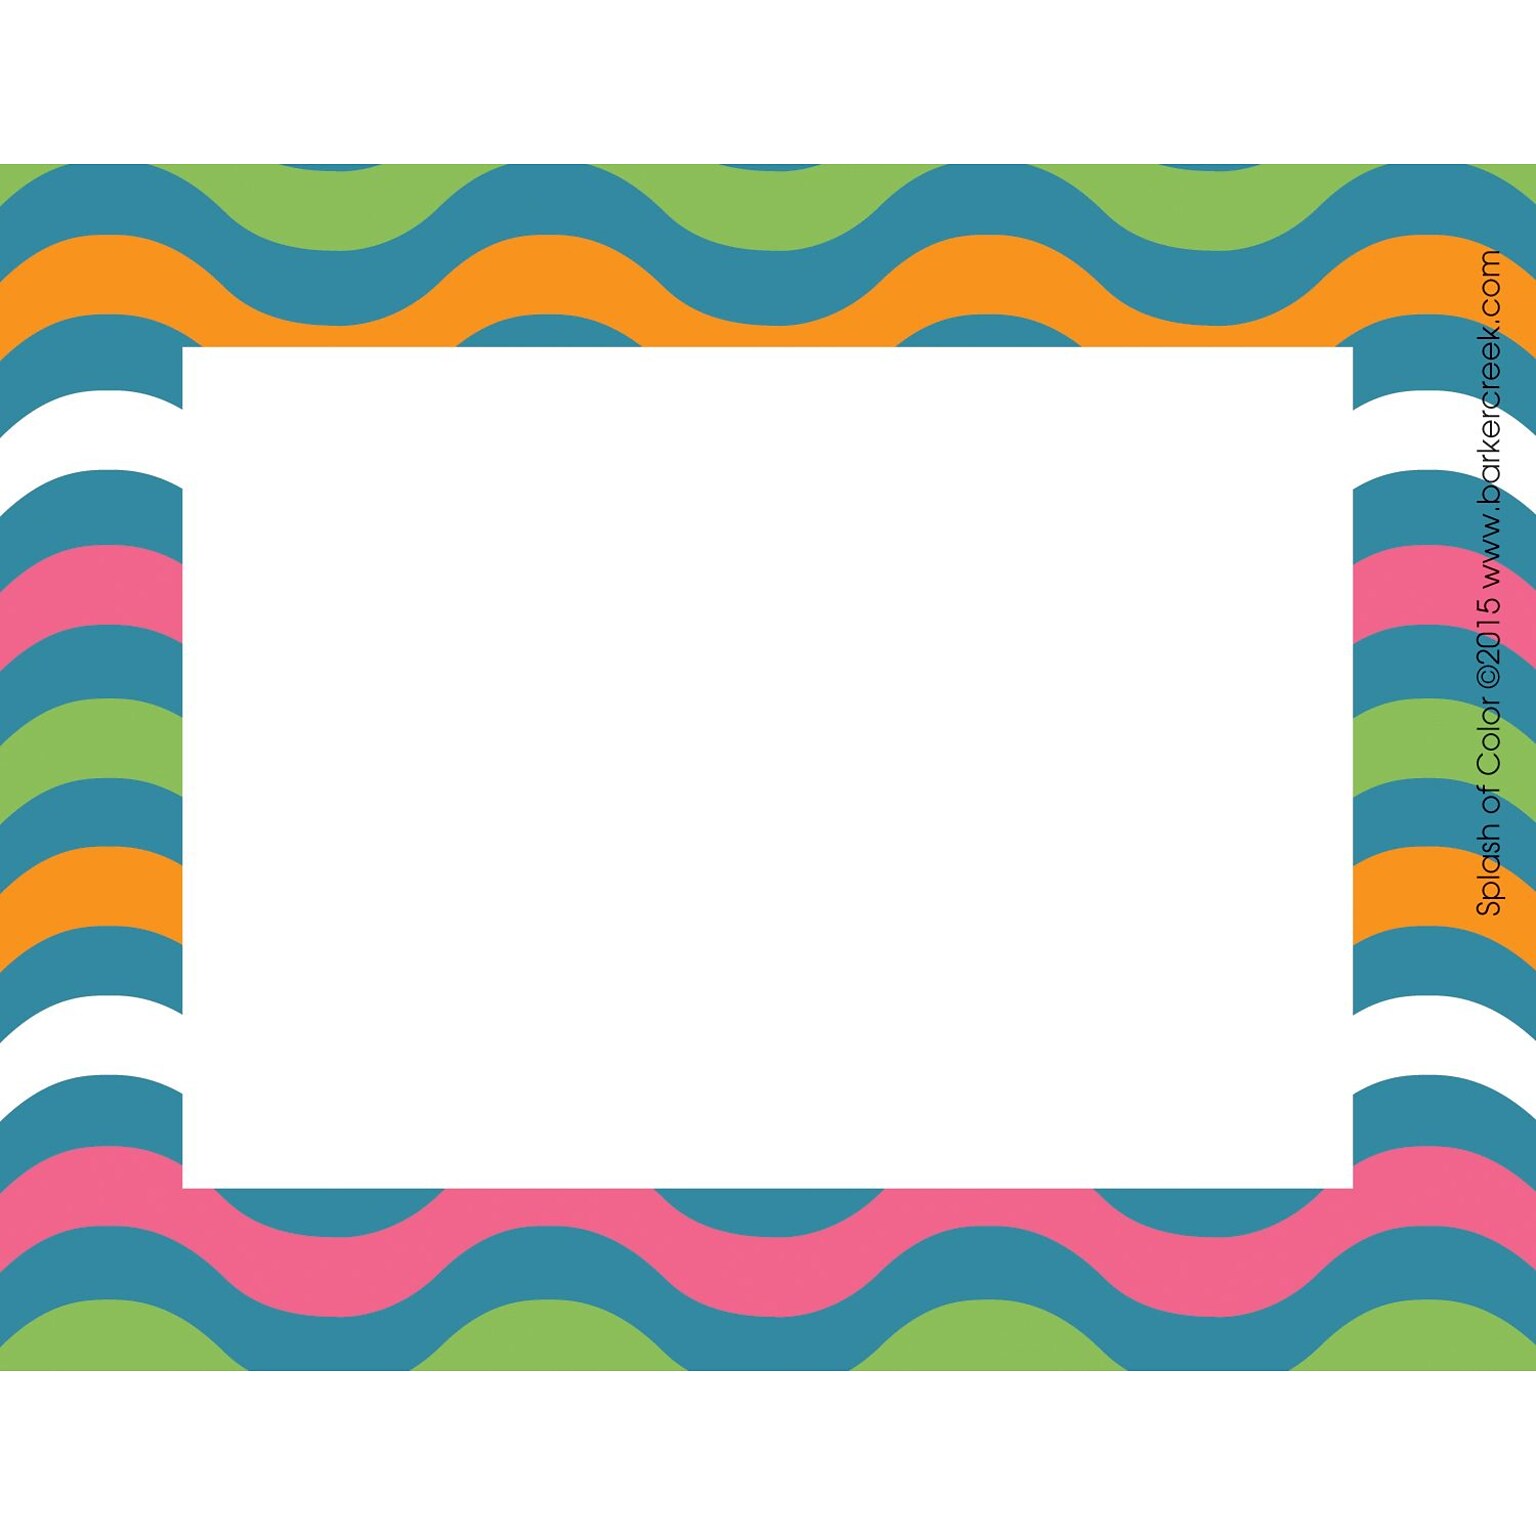 Barker Creek Splash of Color Name Badges & Self-Adhesive Labels, 3.5 x 2.75, multi-design, 45/Pk